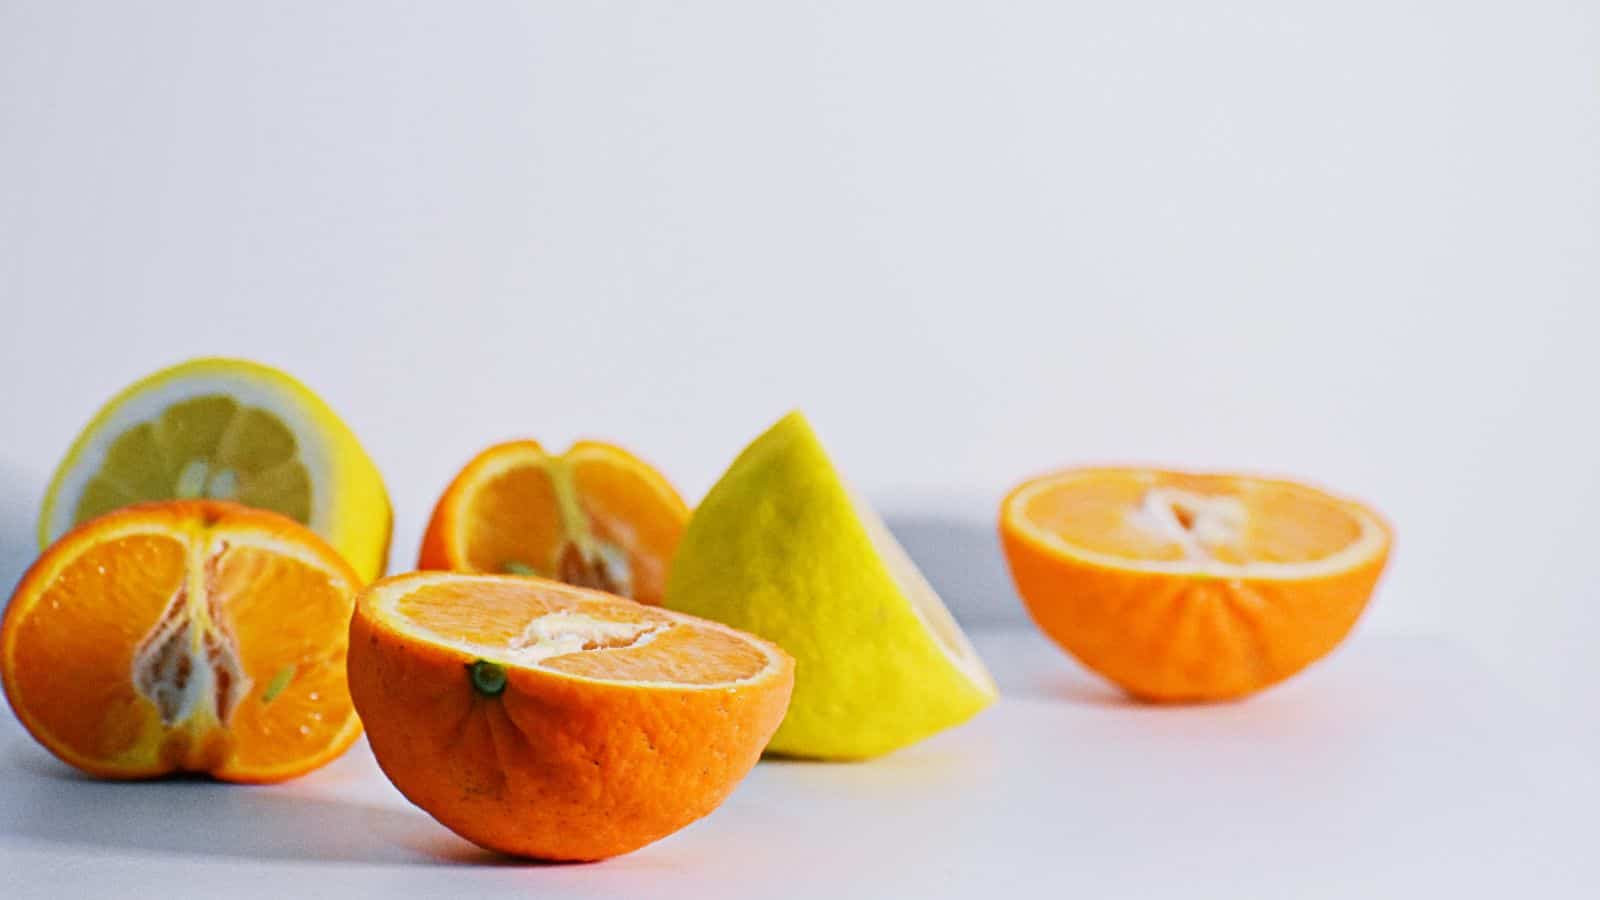 Sliced Oranges And Lemons.